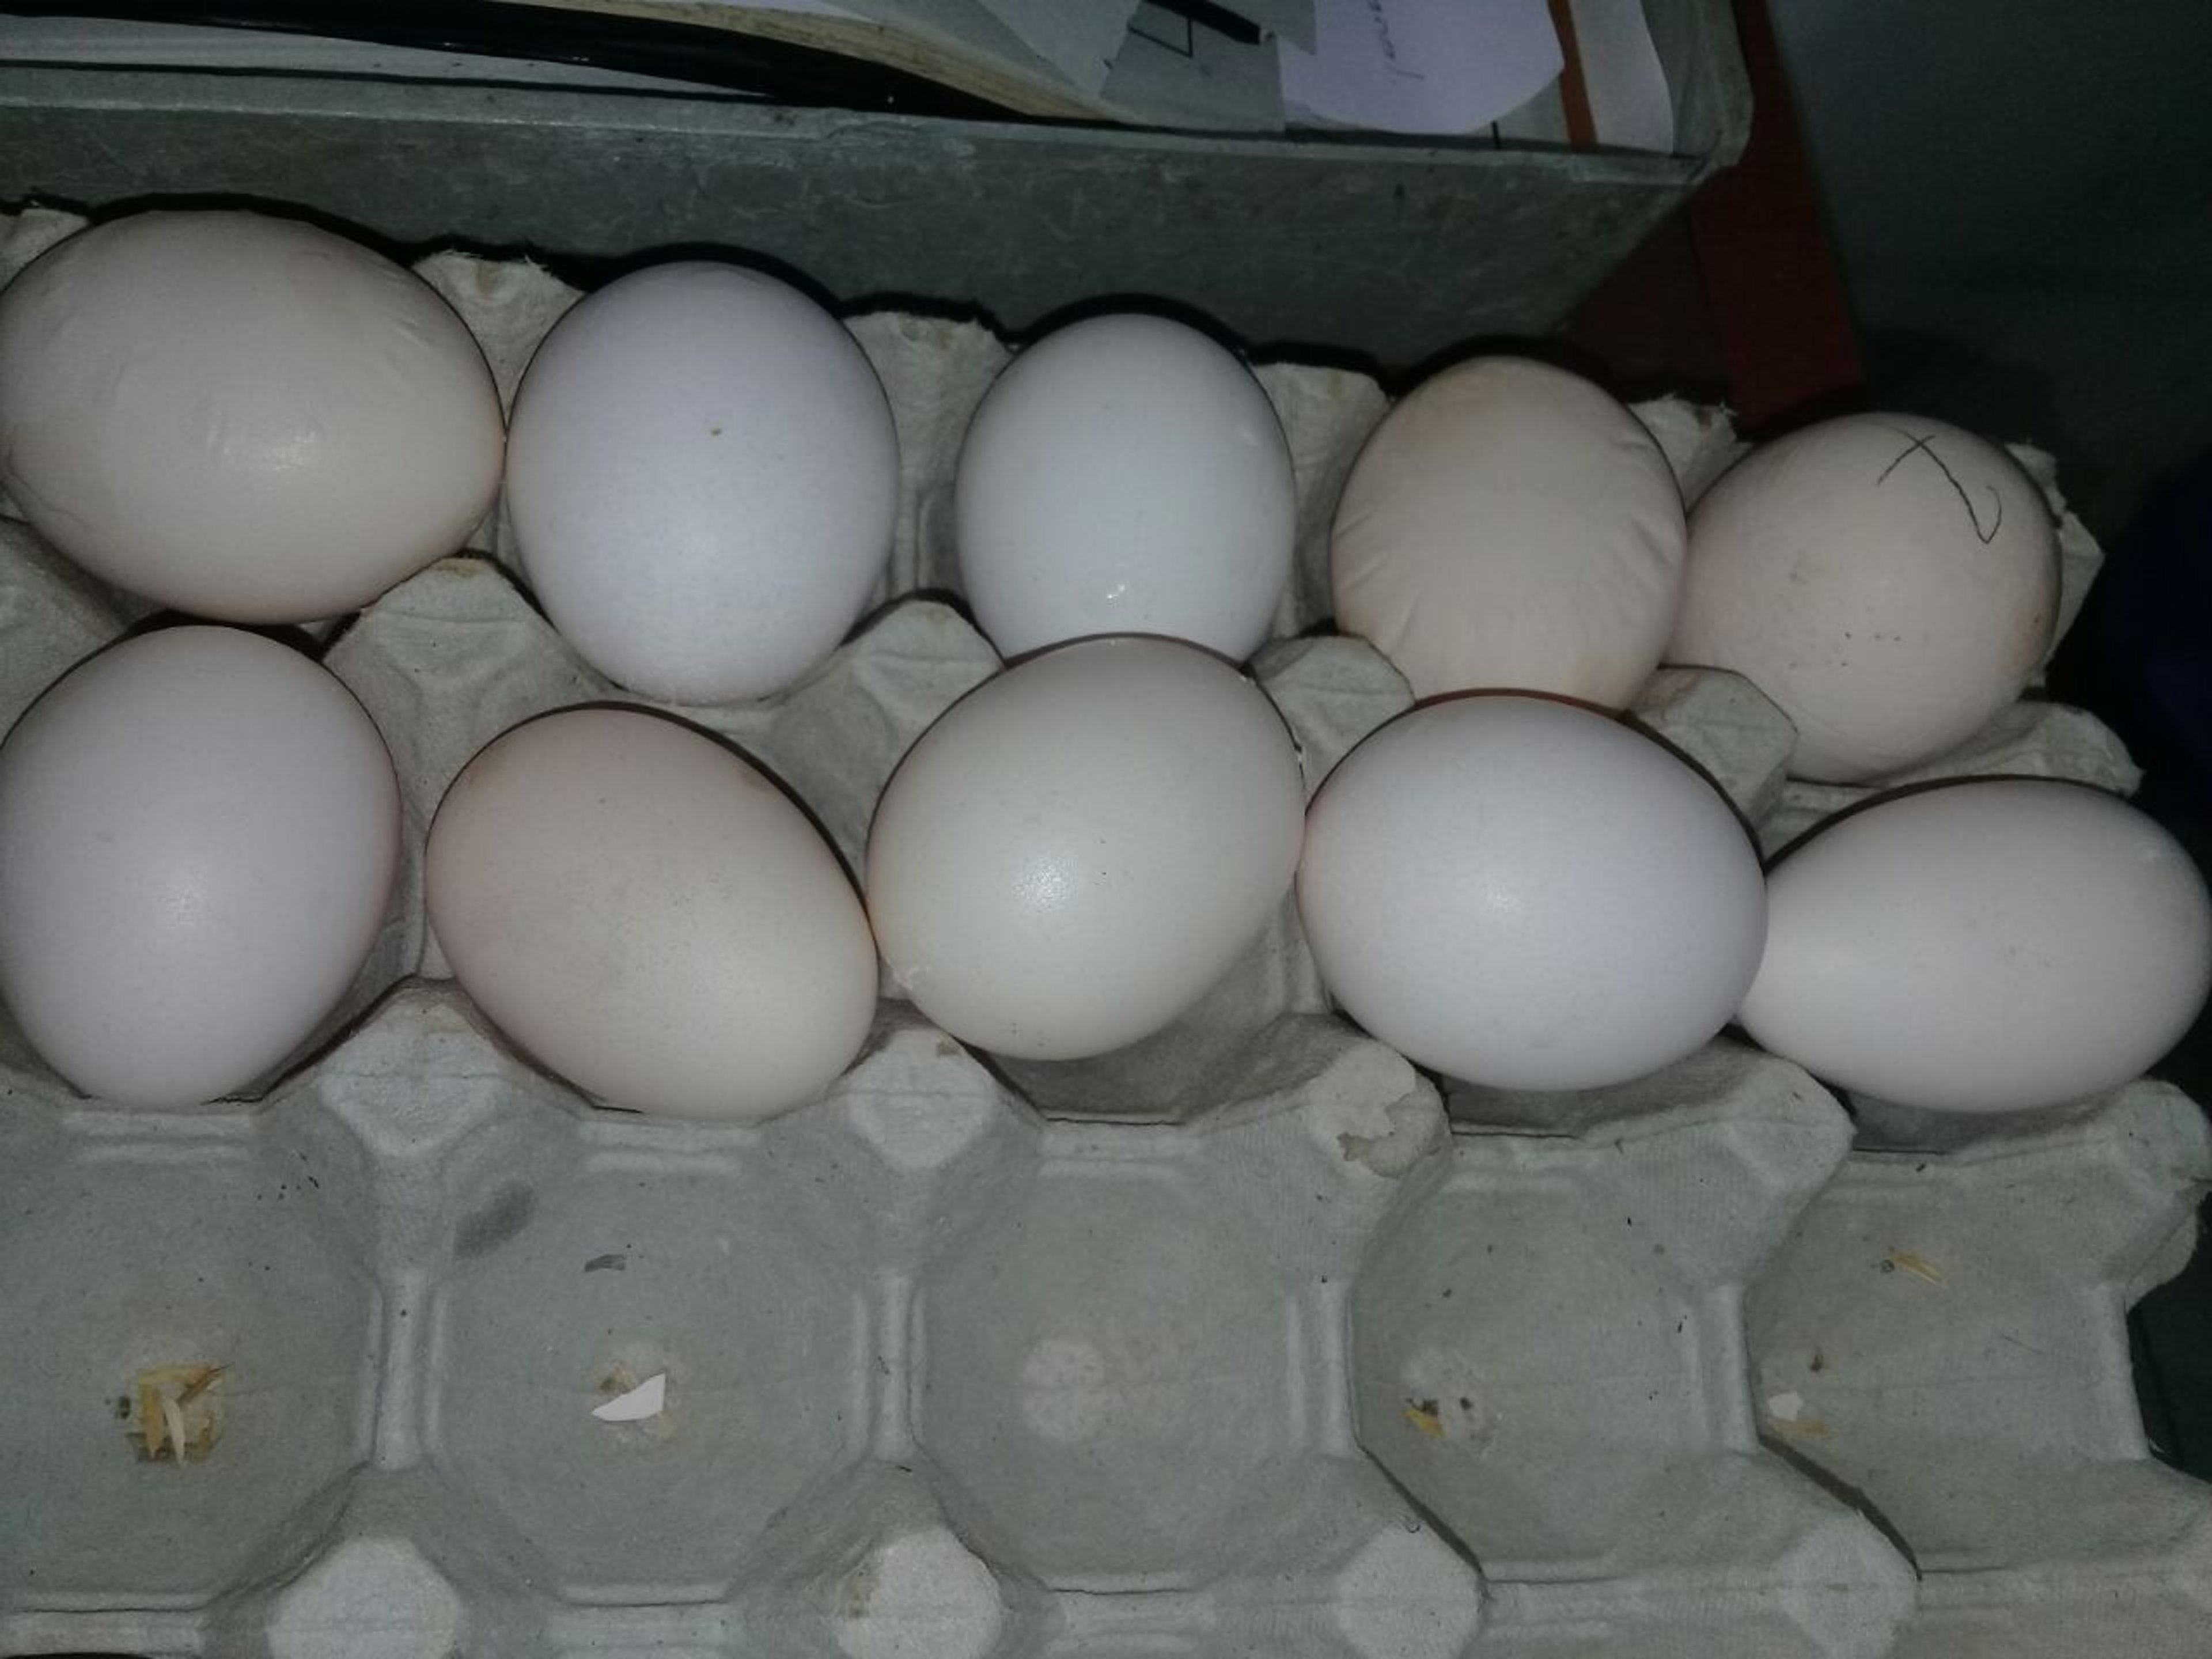 Abnormally shaped eggs, chicken